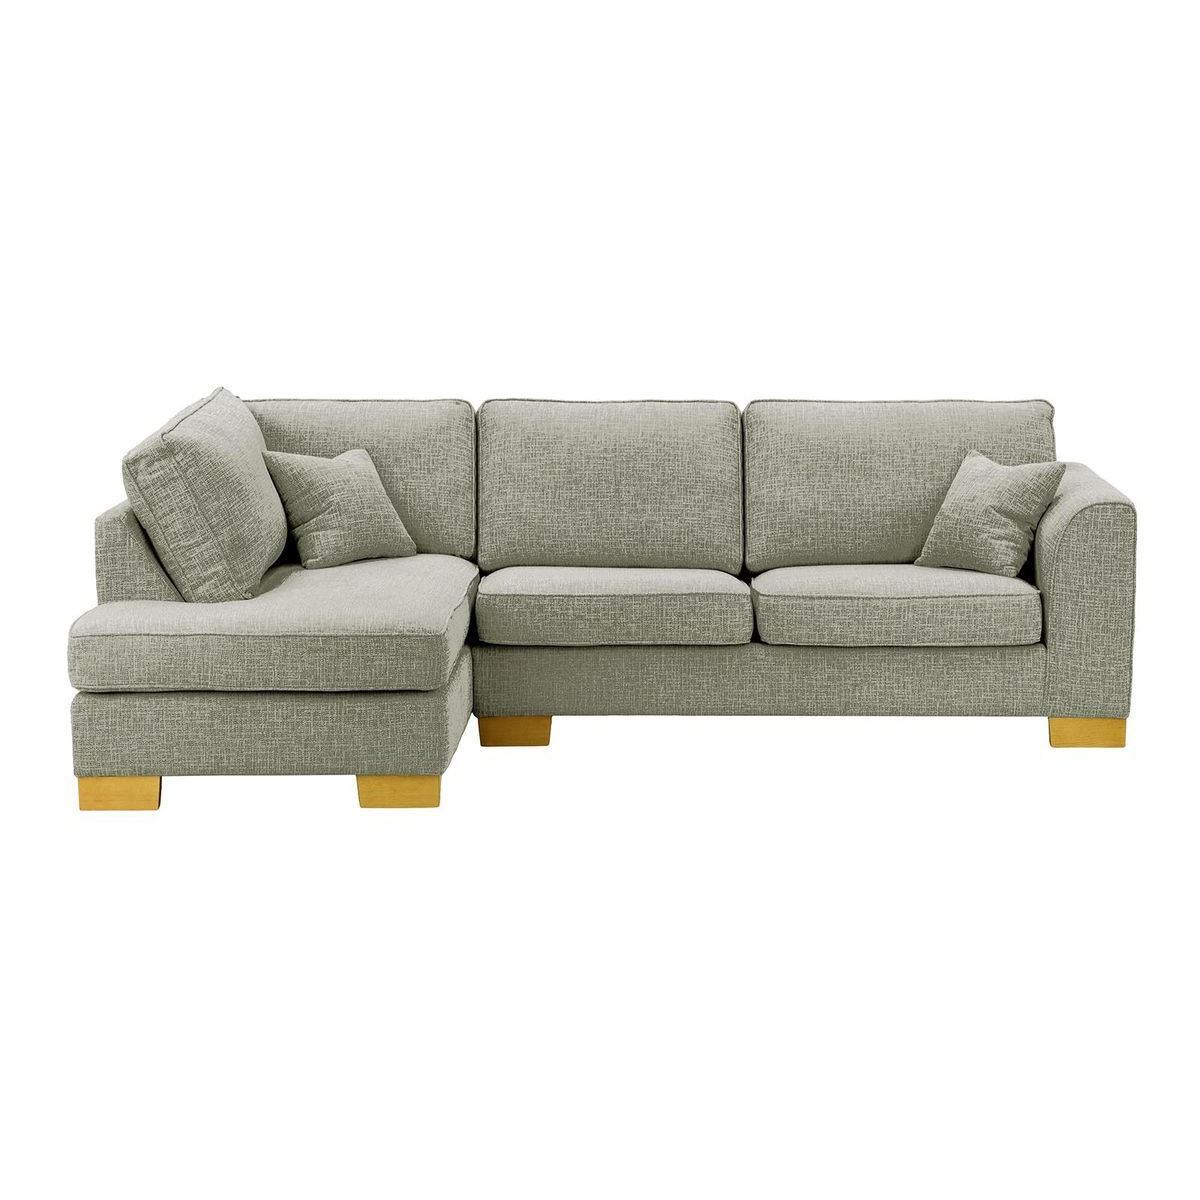 Avos Left Hand Corner Sofa Bed, silver, Leg colour: like oak - image 1